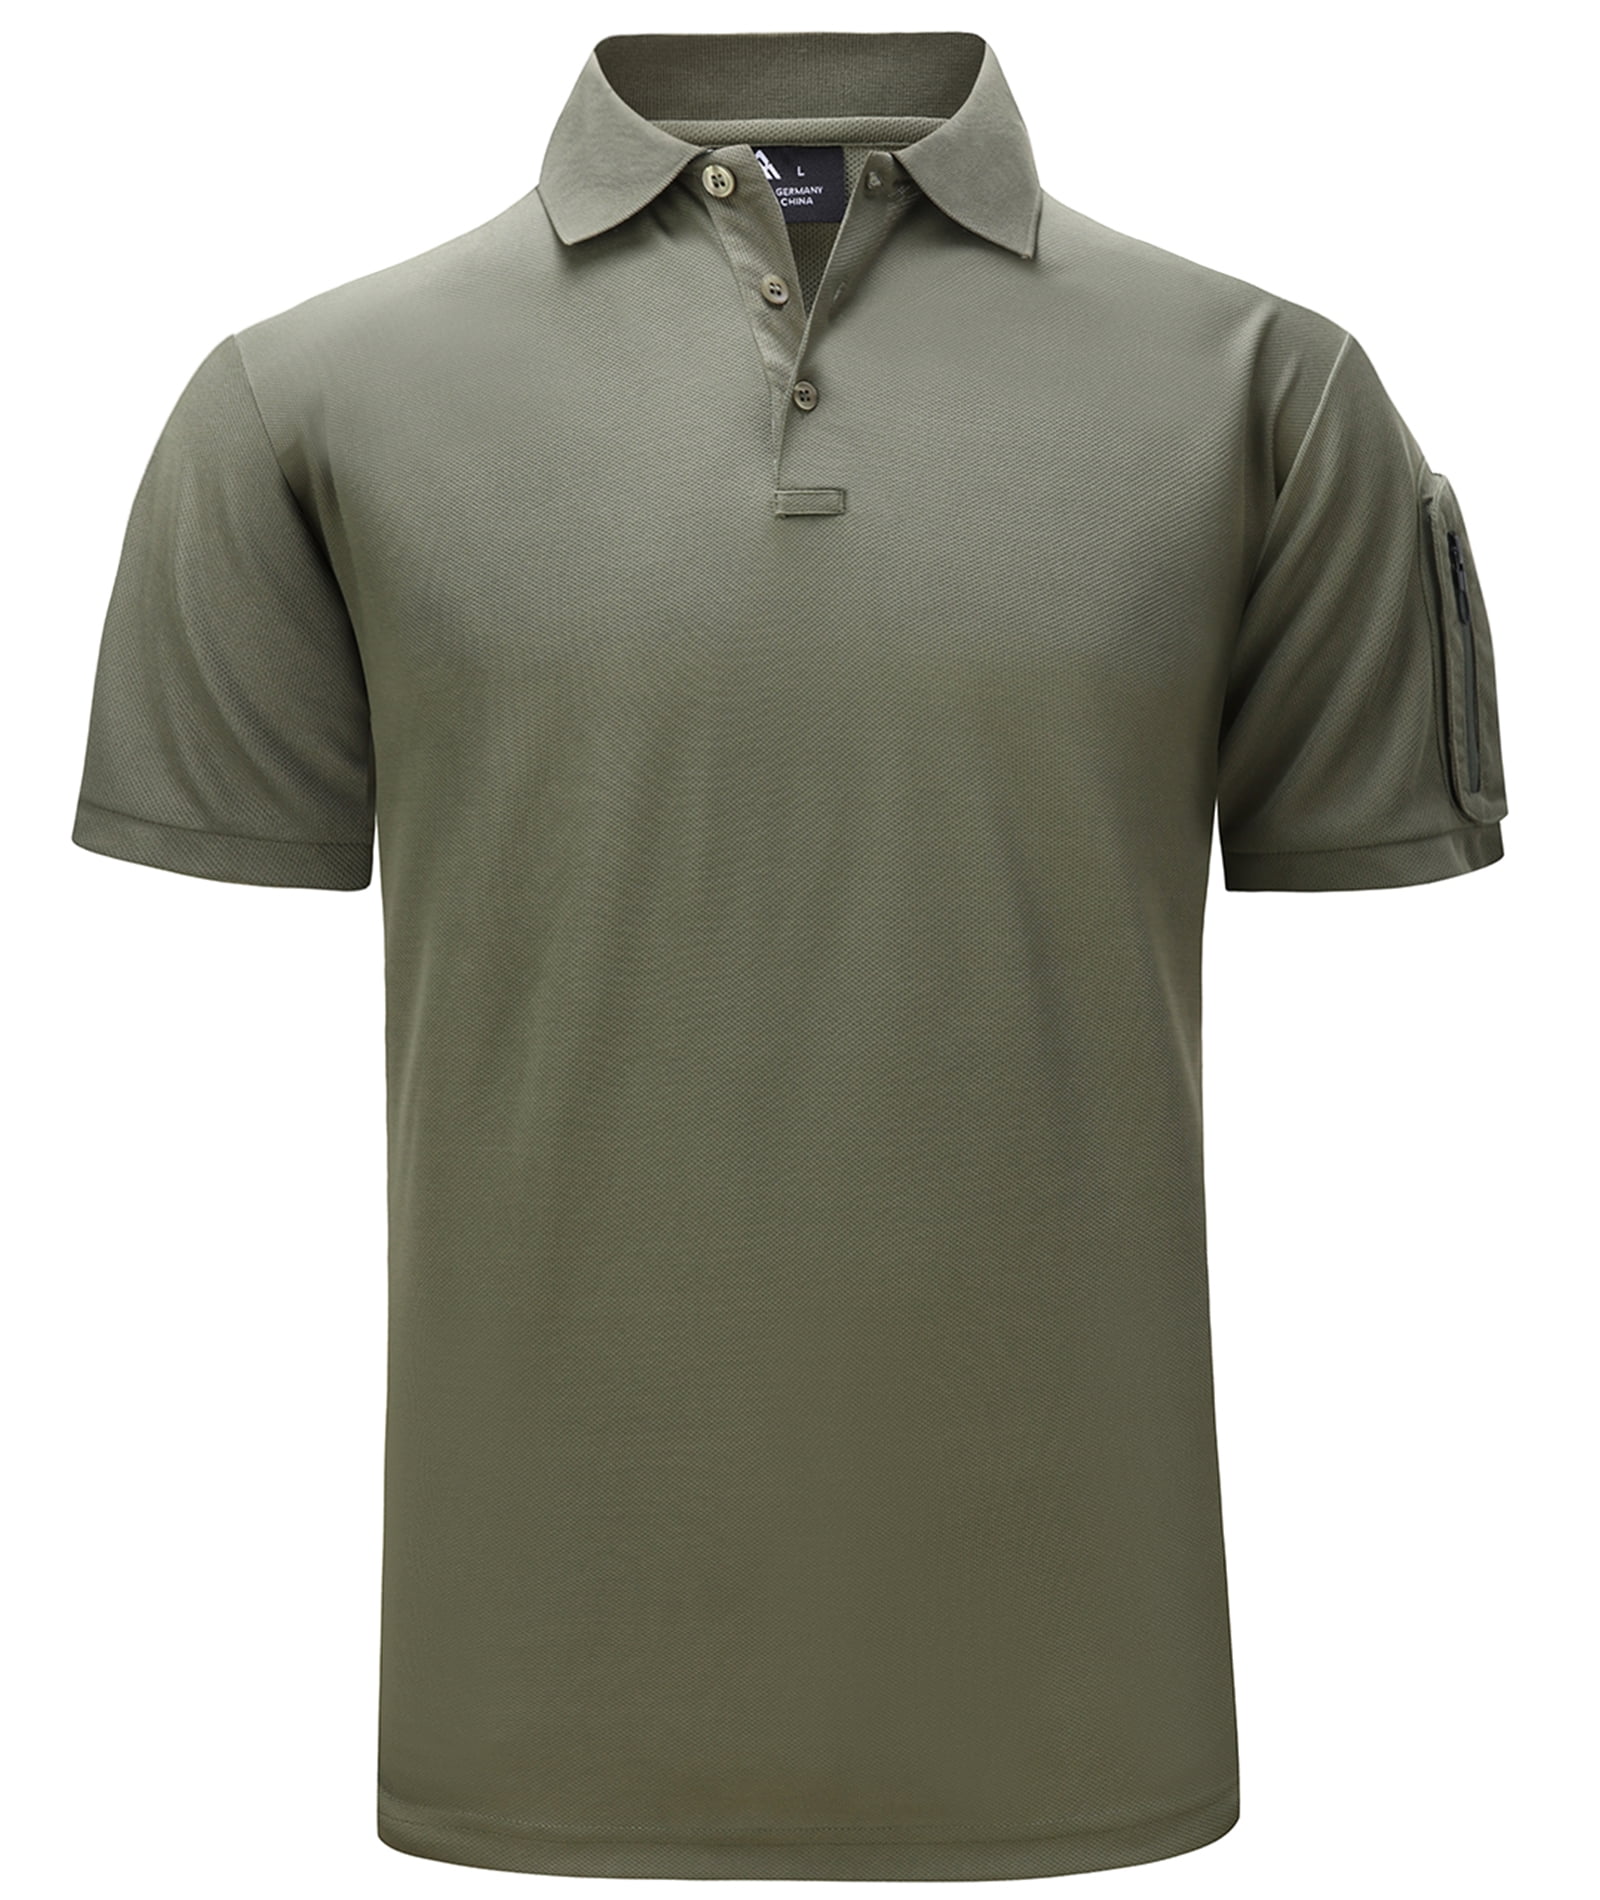 SCODI Polo Shirts for Men Short Sleeve Moisture Wicking Outdoor ...